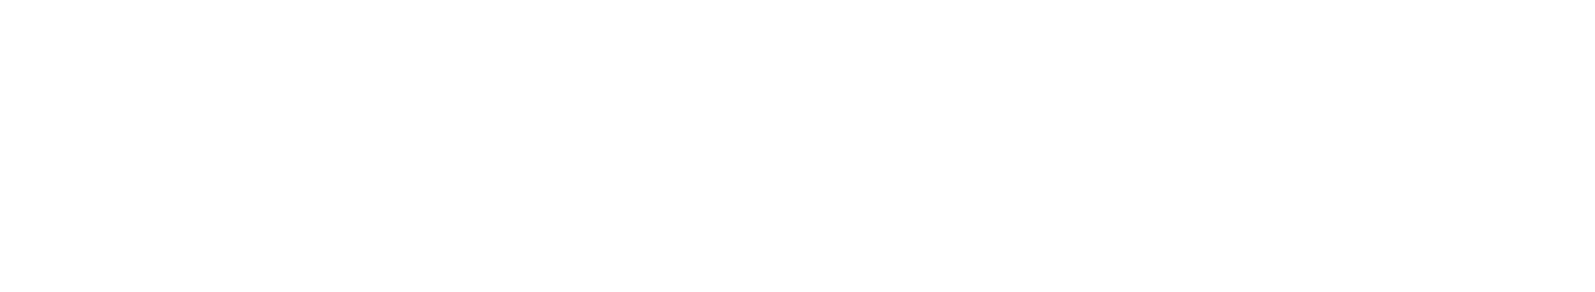 China Construction Bank logo large for dark backgrounds (transparent PNG)